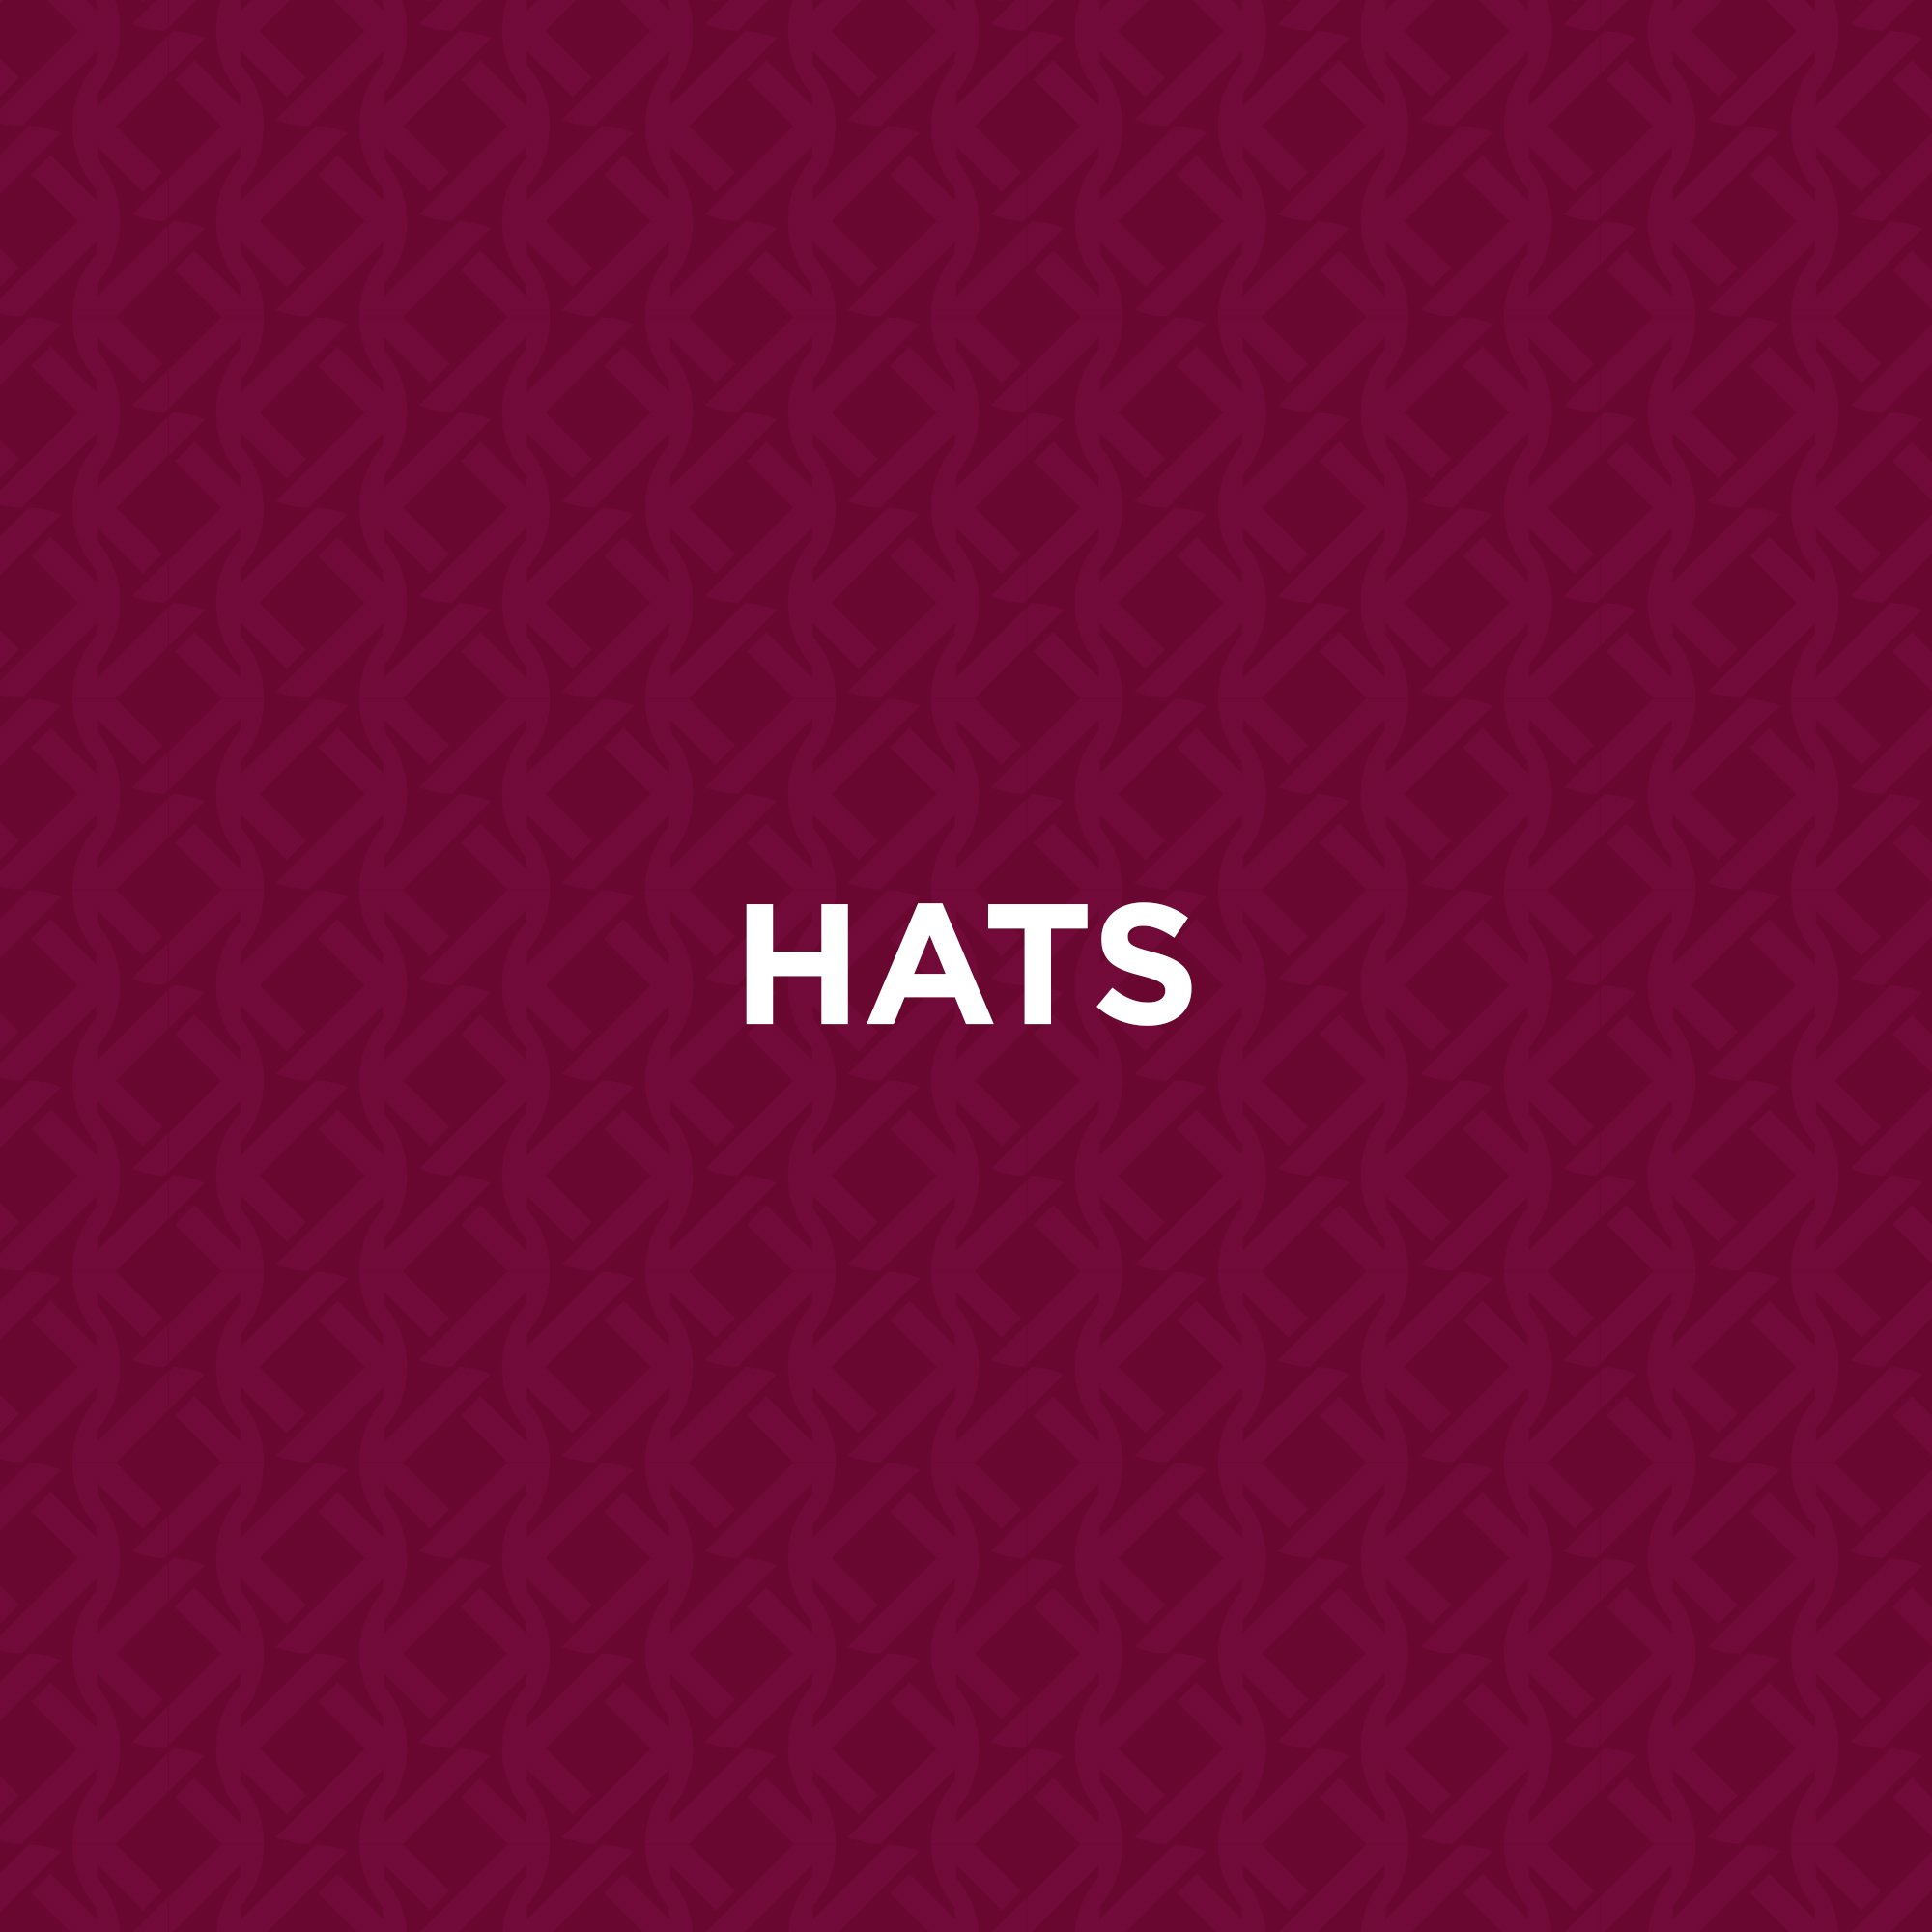 Hats.jpg